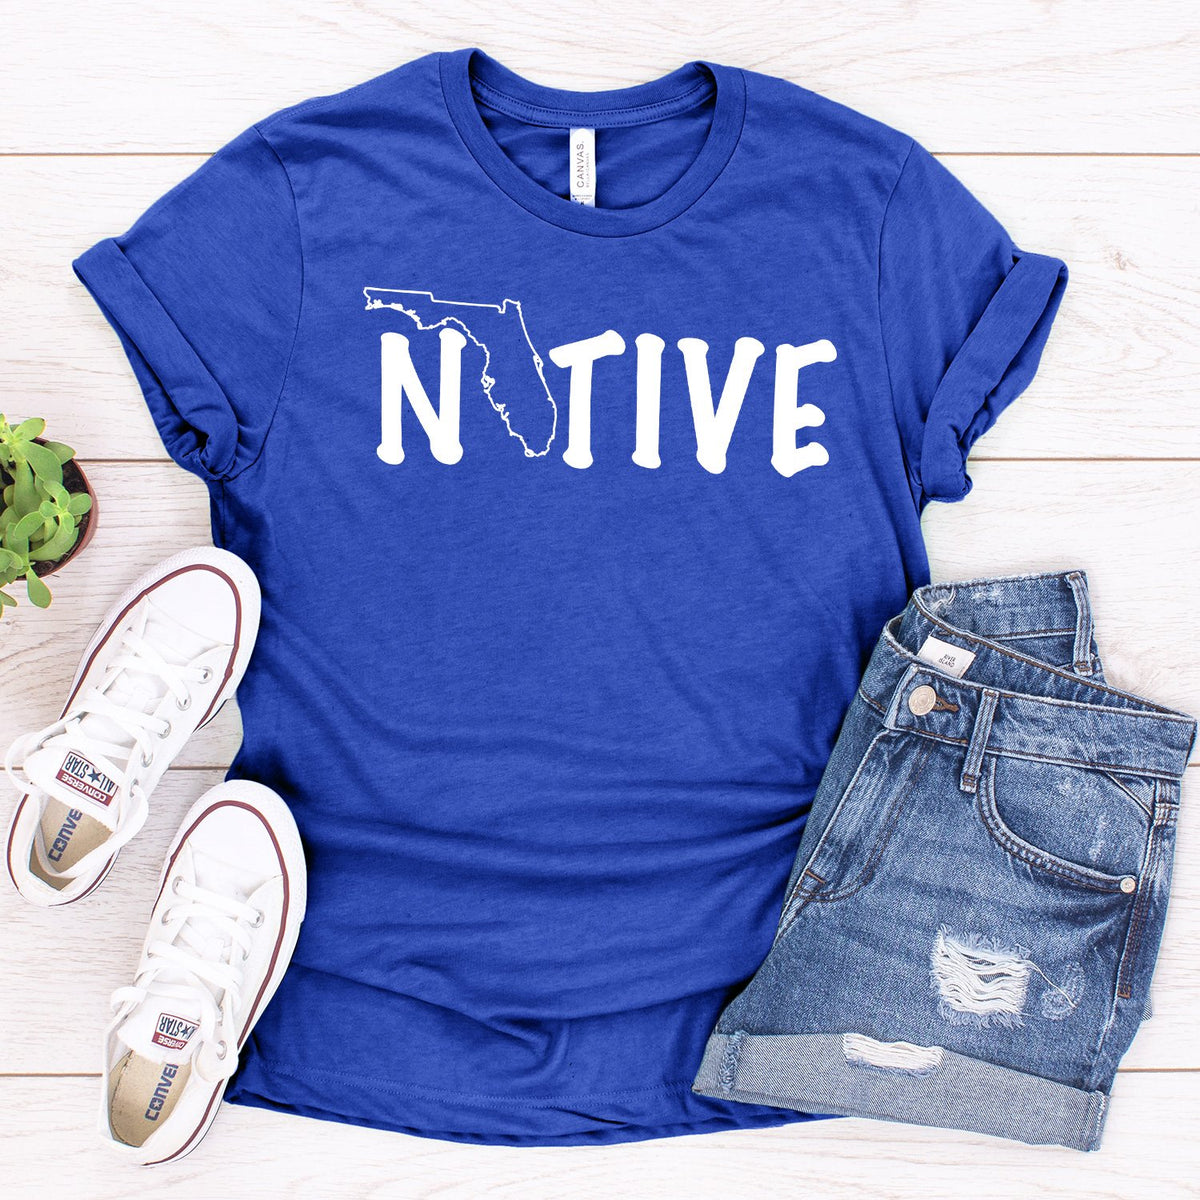 FL Native - Short Sleeve Tee Shirt